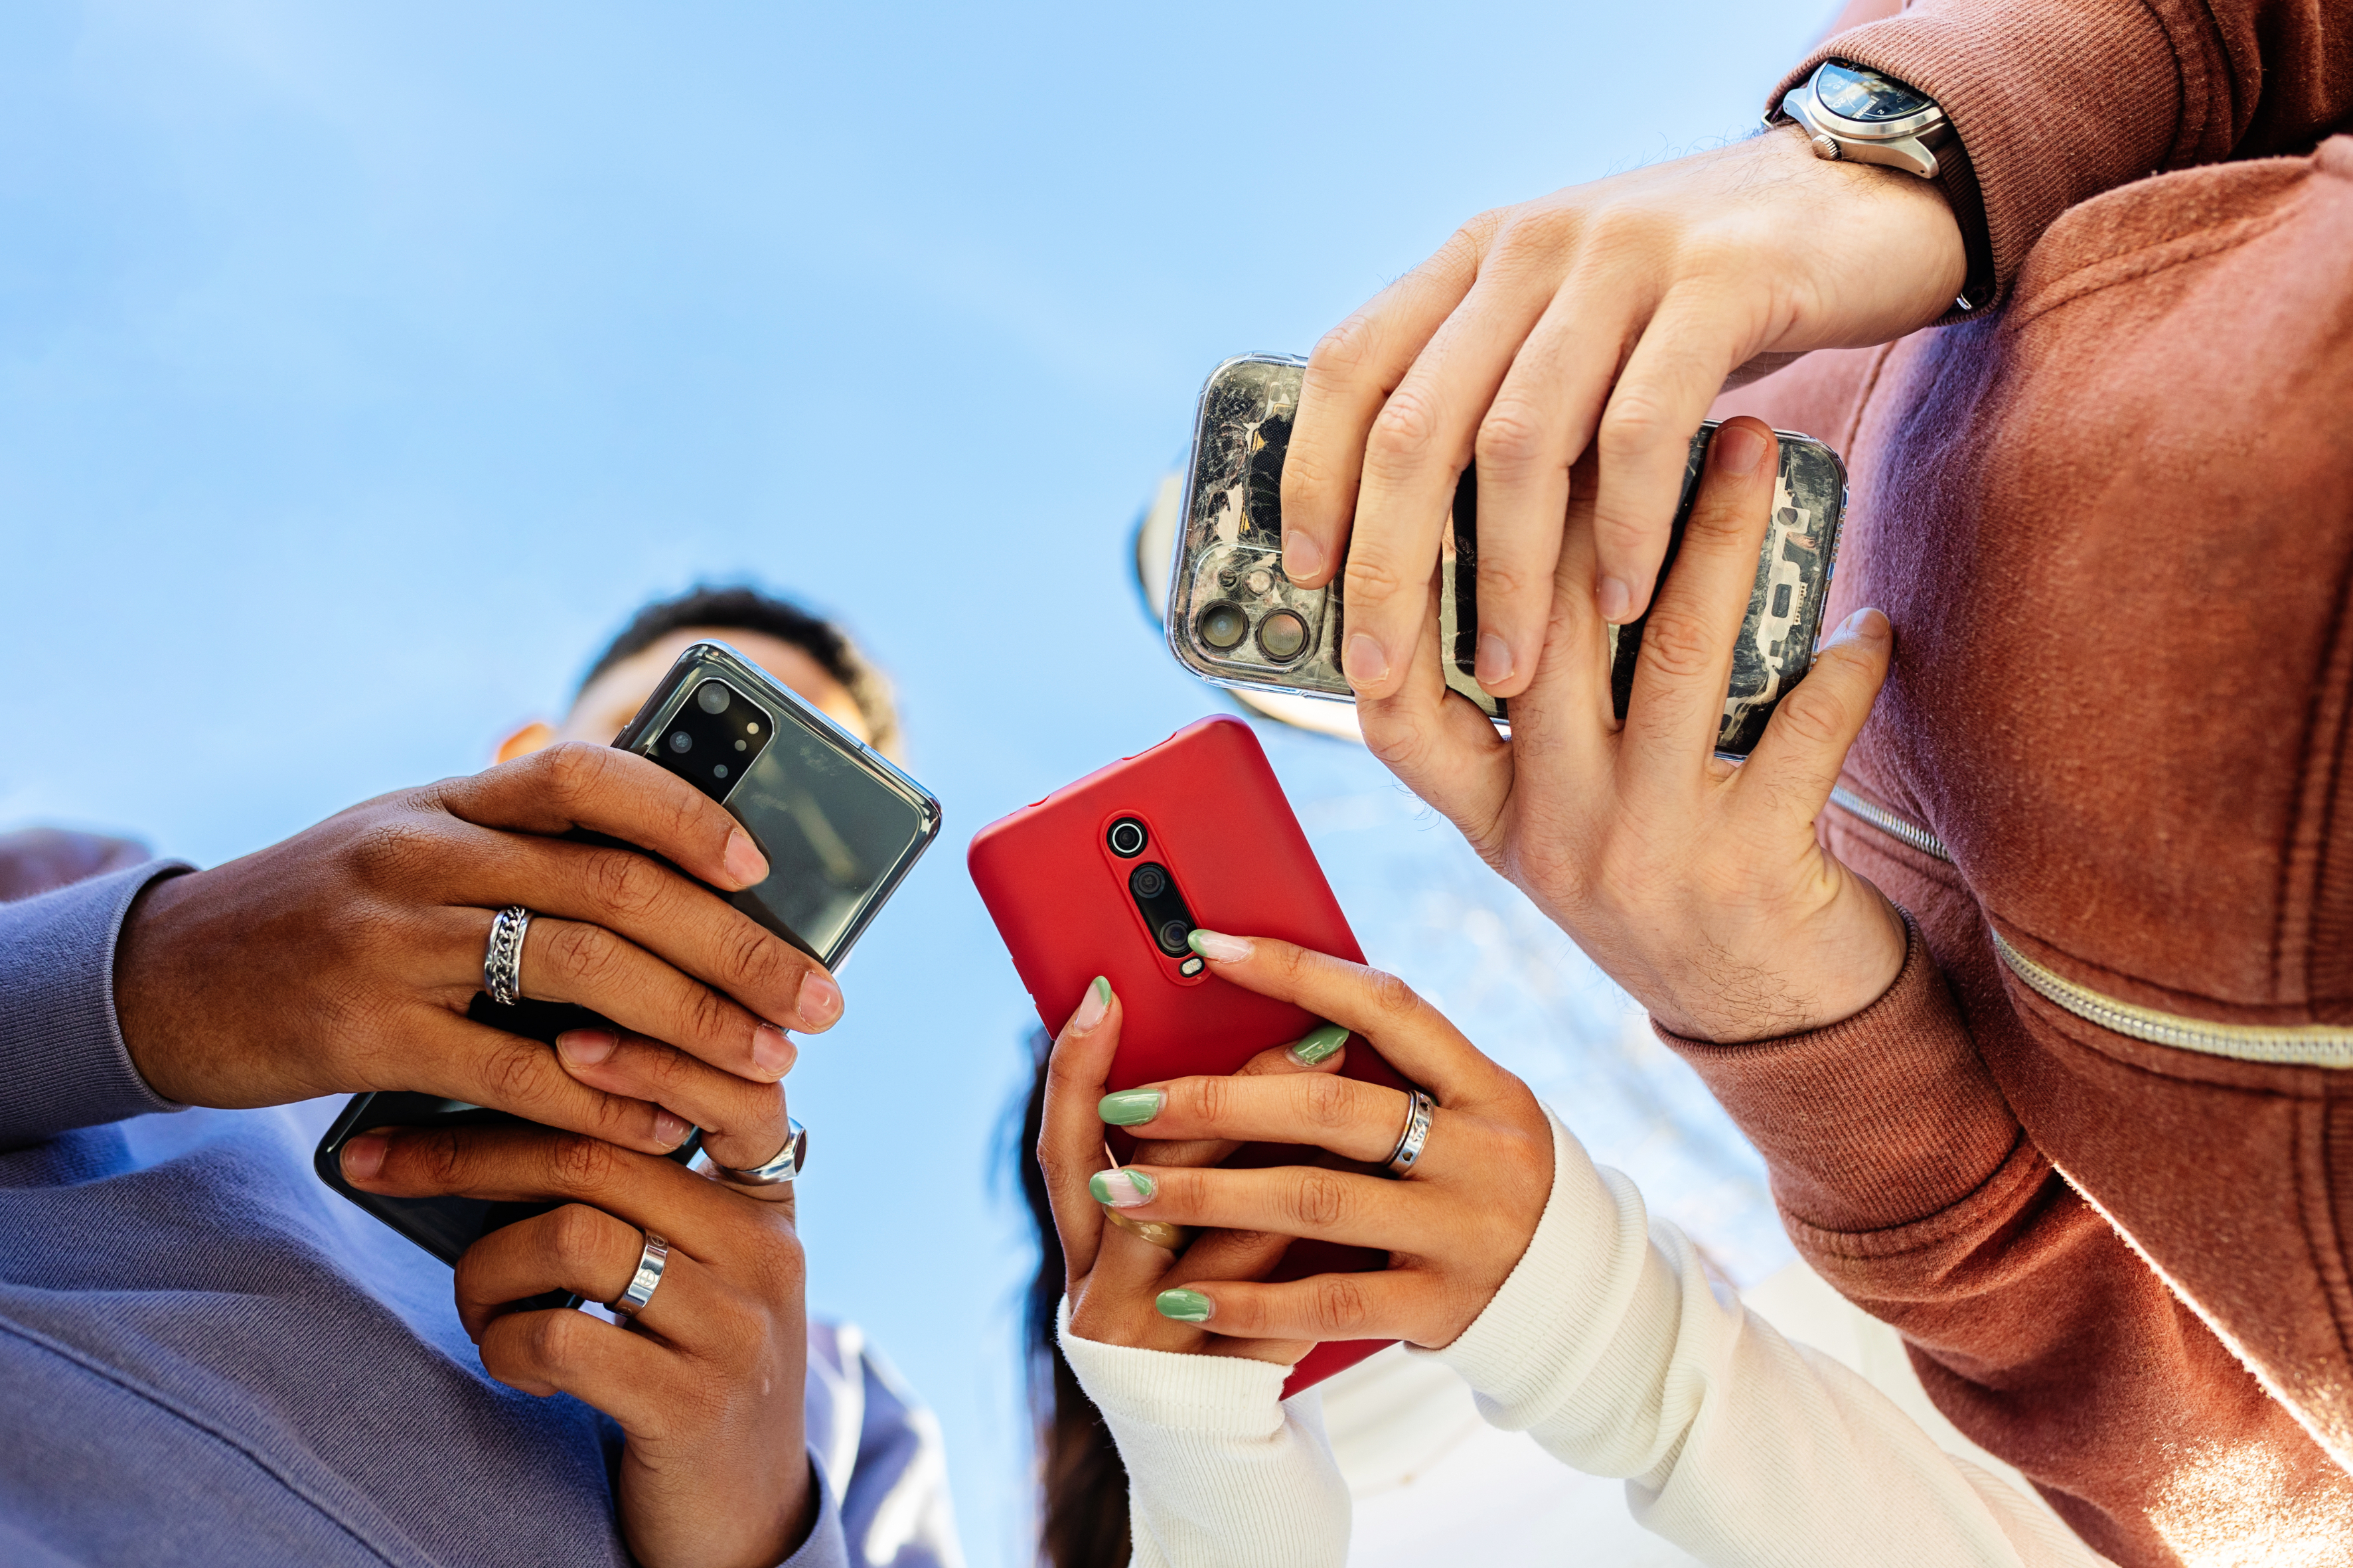 Three people holding smartphones viewed from below